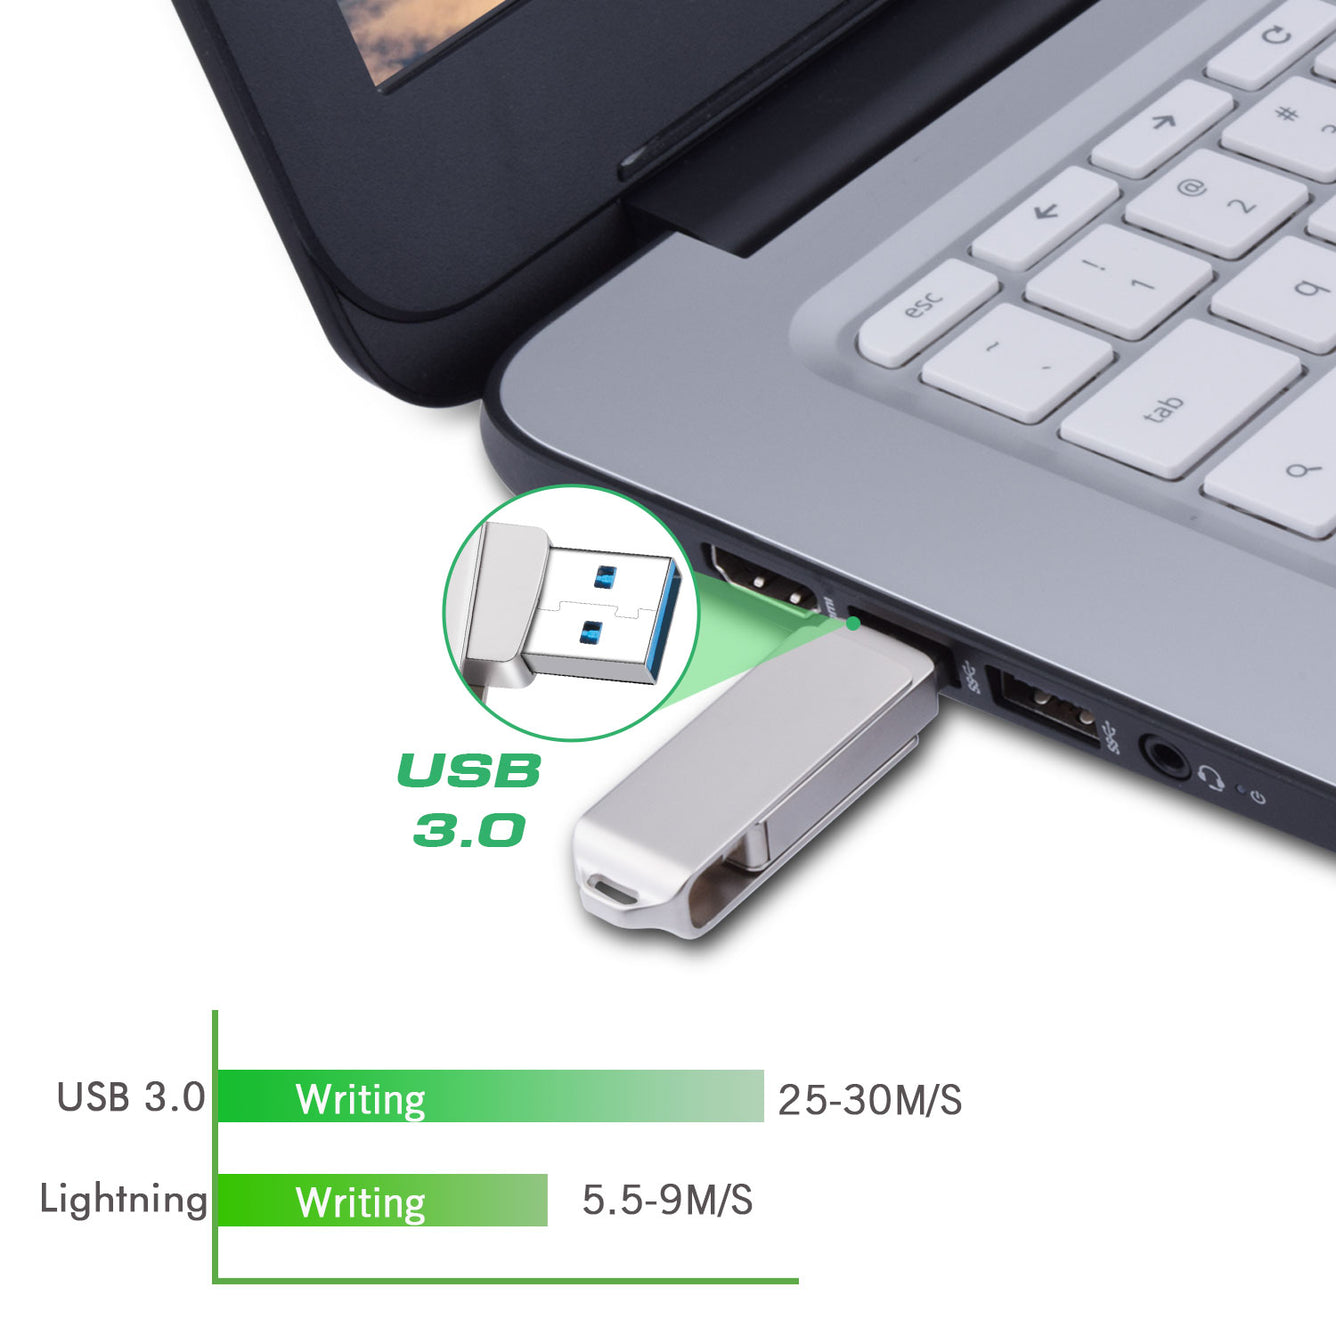 128GB 4-in-1 Swivel USB 3.0 Flash Drive with Lightning, Micro-USB, USB A Port, USB C Adapter